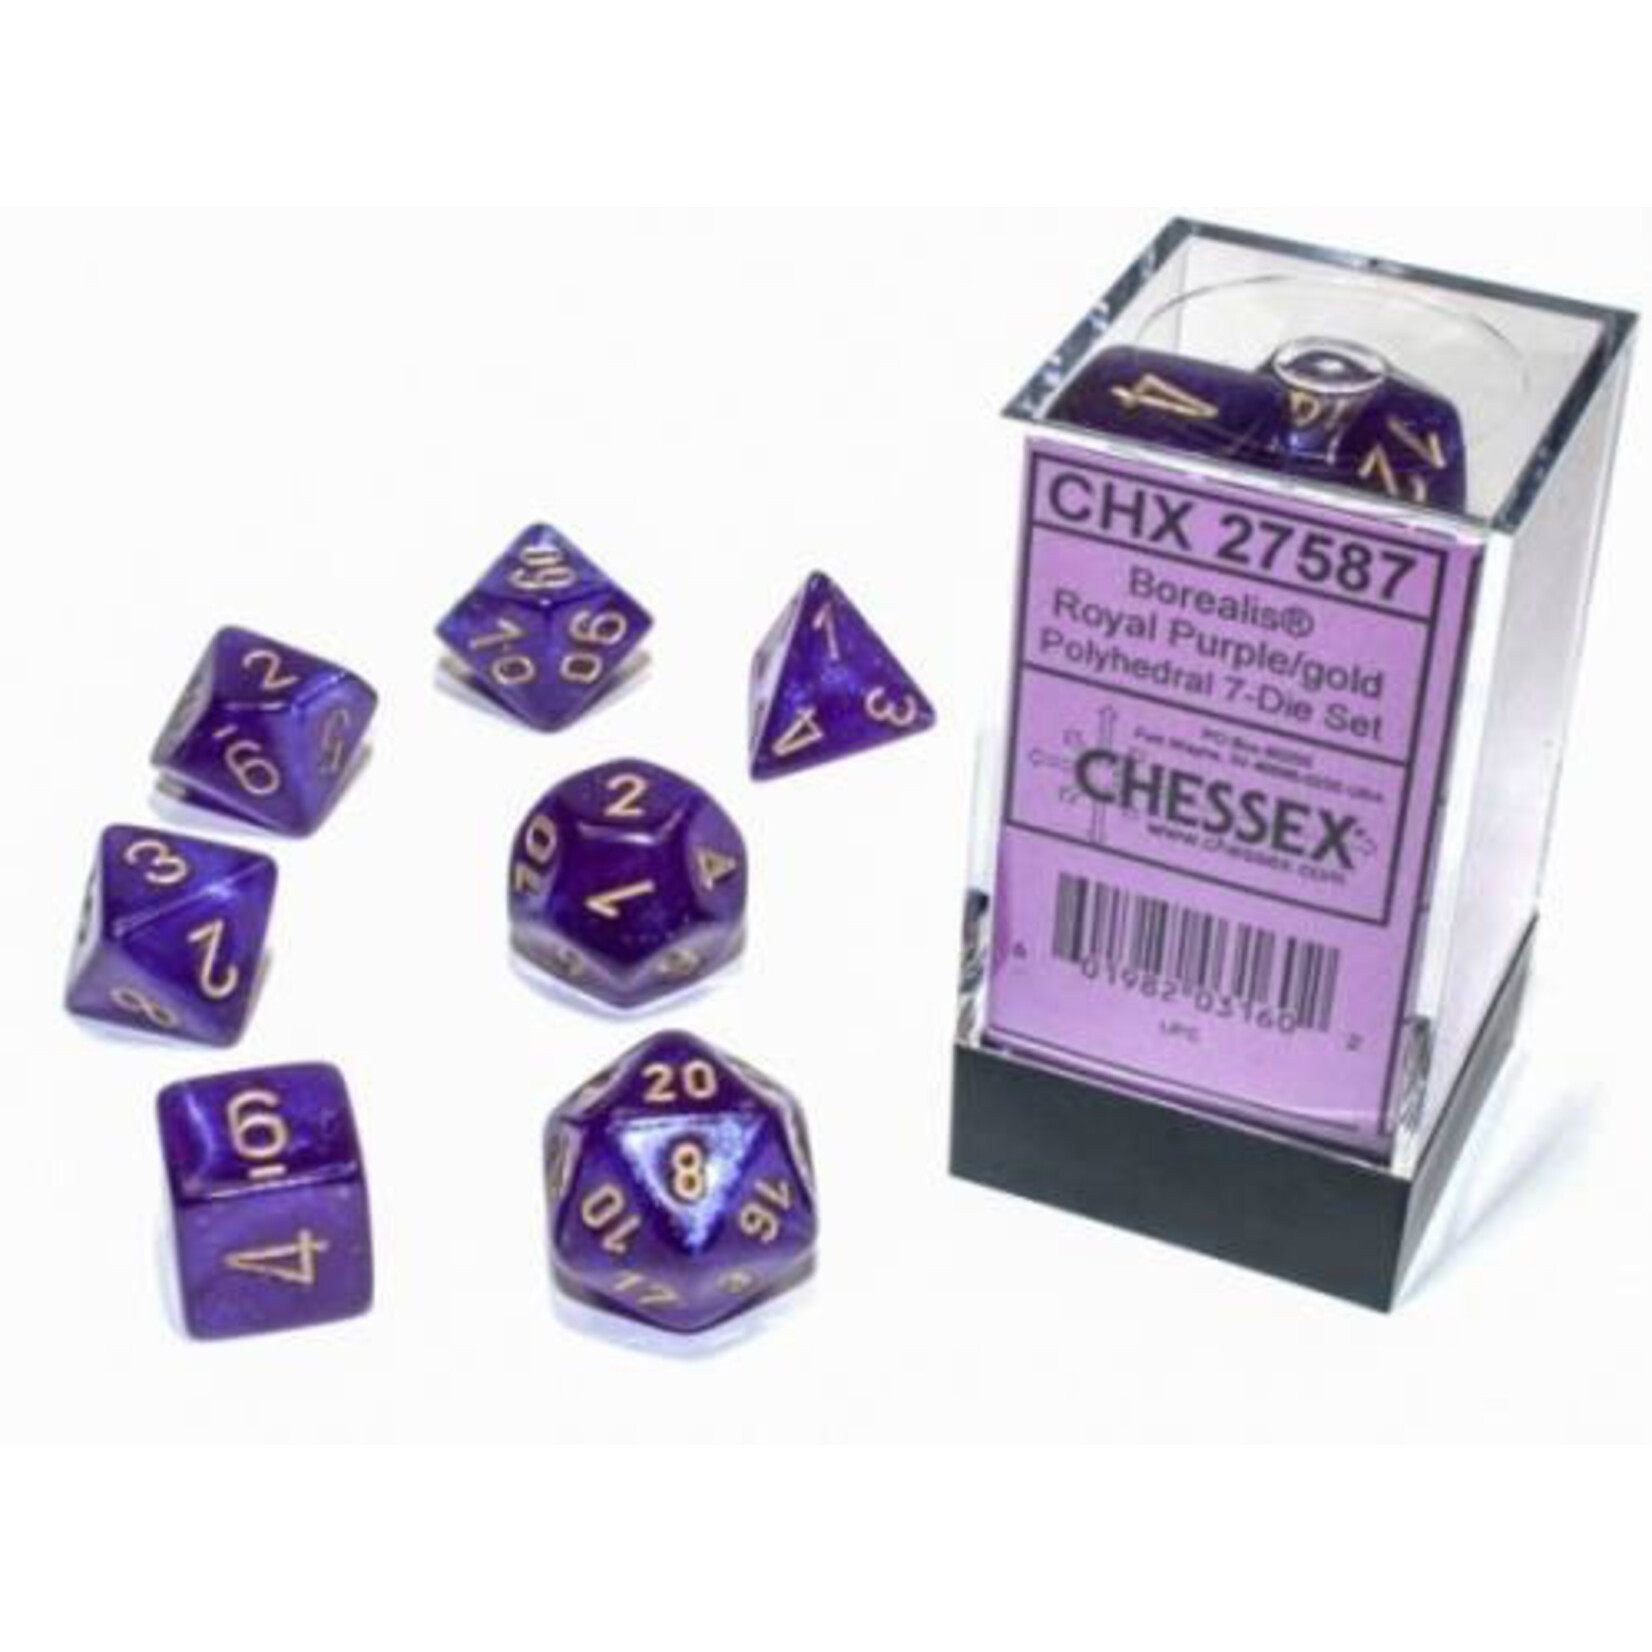 Chessex Chessex 7-Die set Borealis Luminary - Royal Purple/Gold